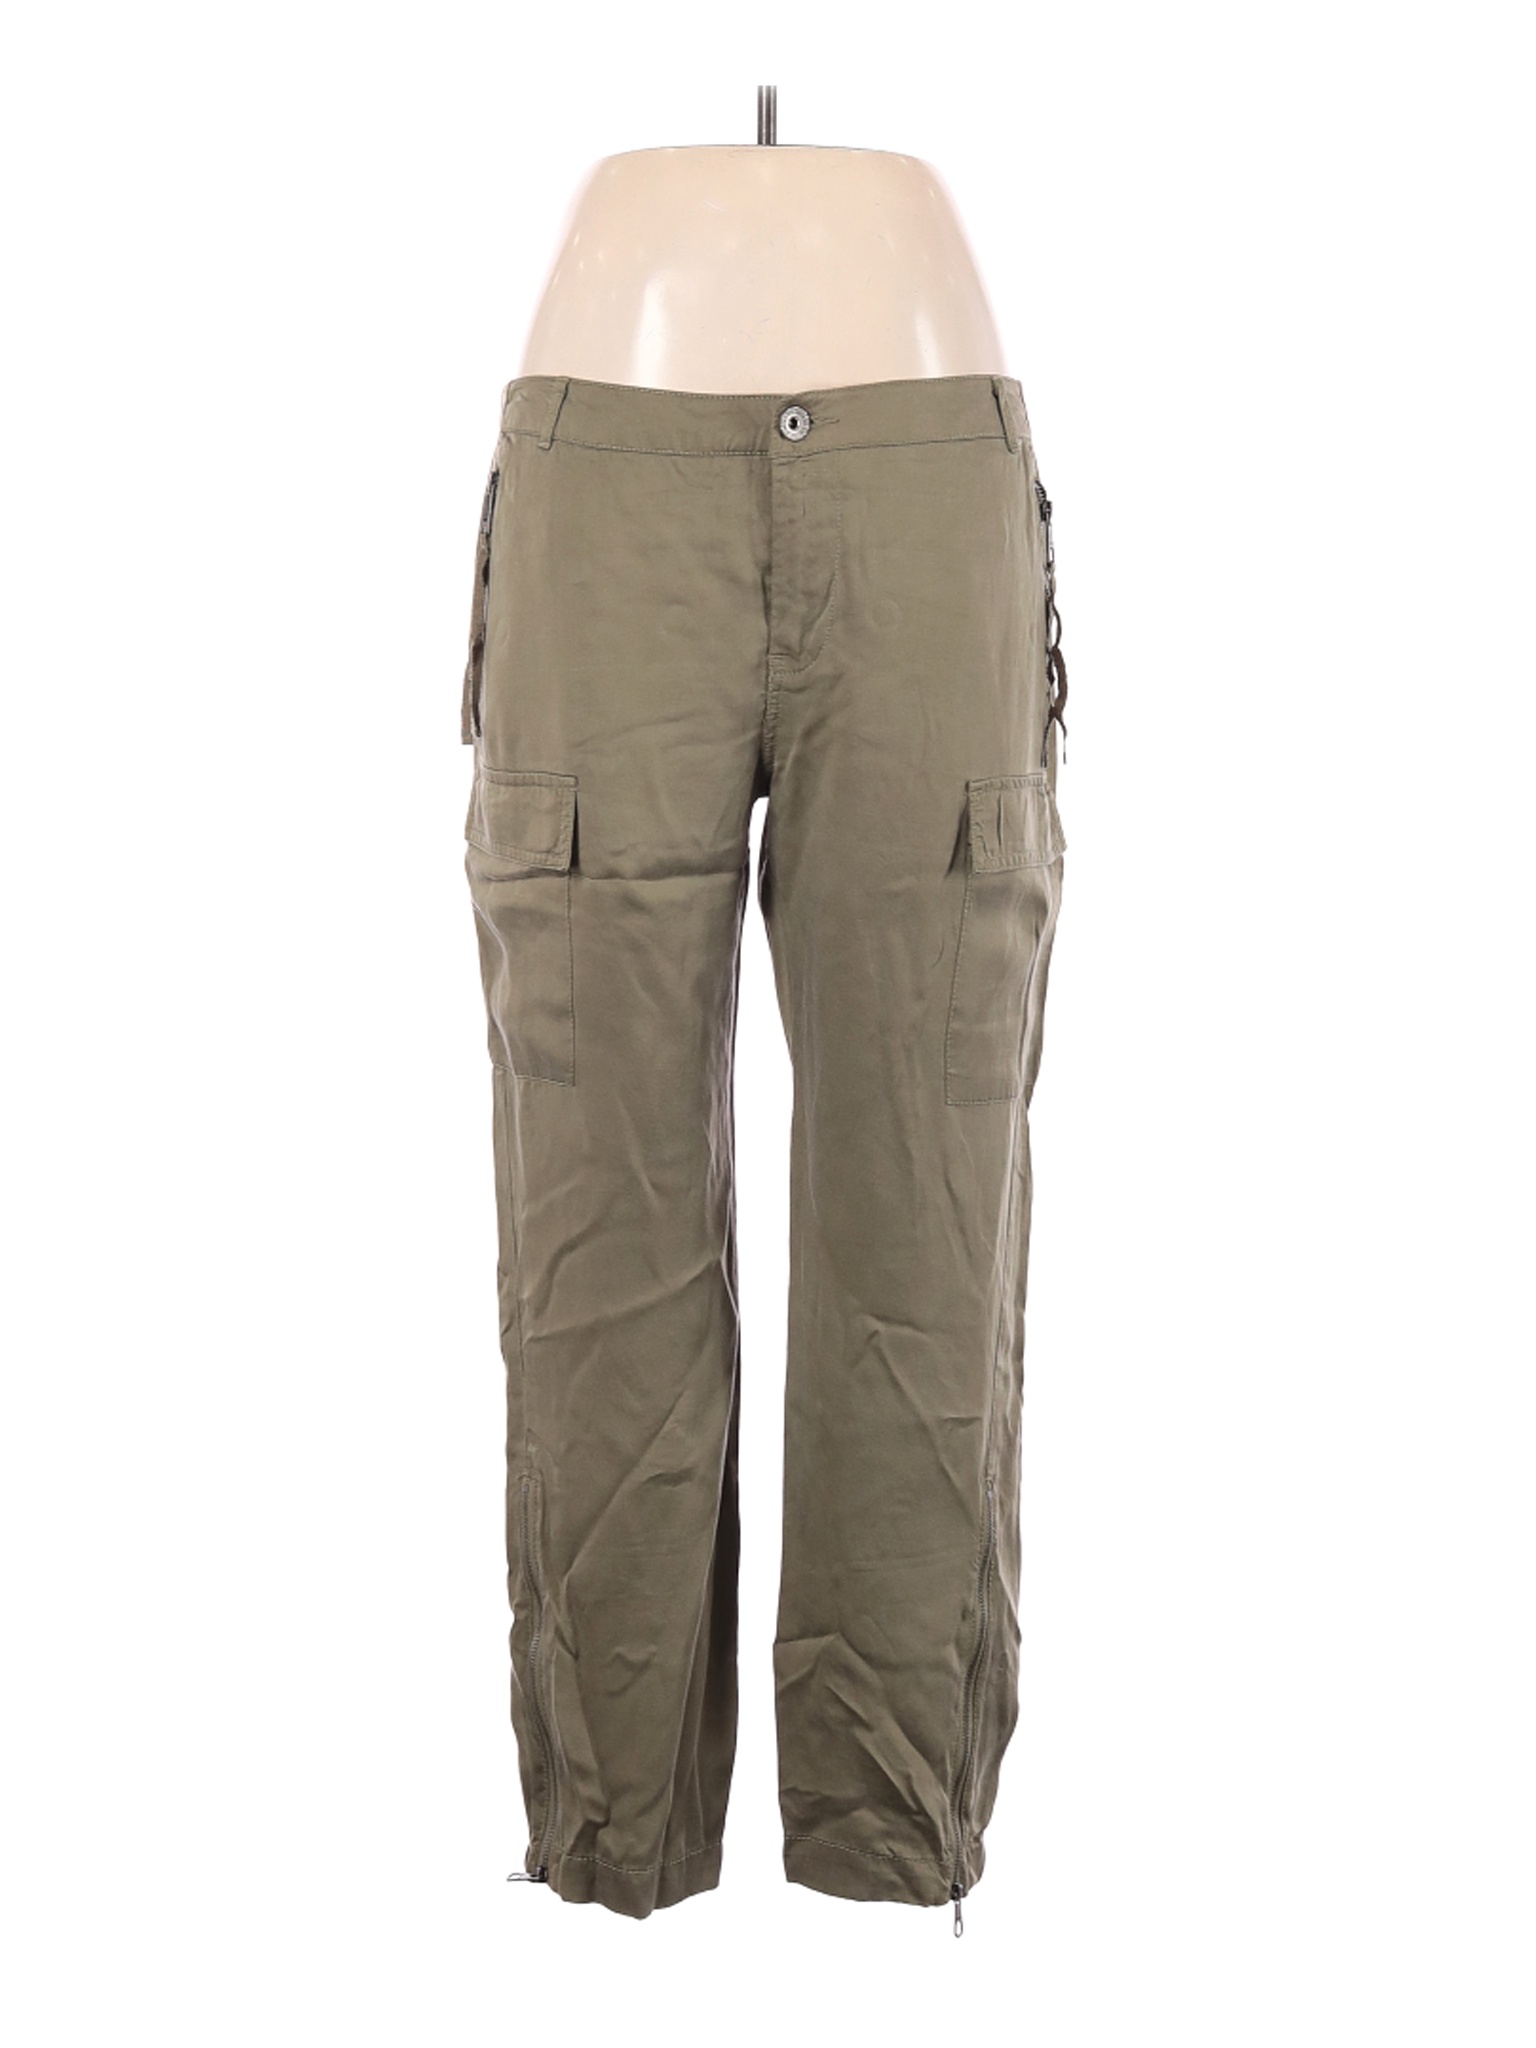 Guess Women Green Cargo Pants 32W | eBay